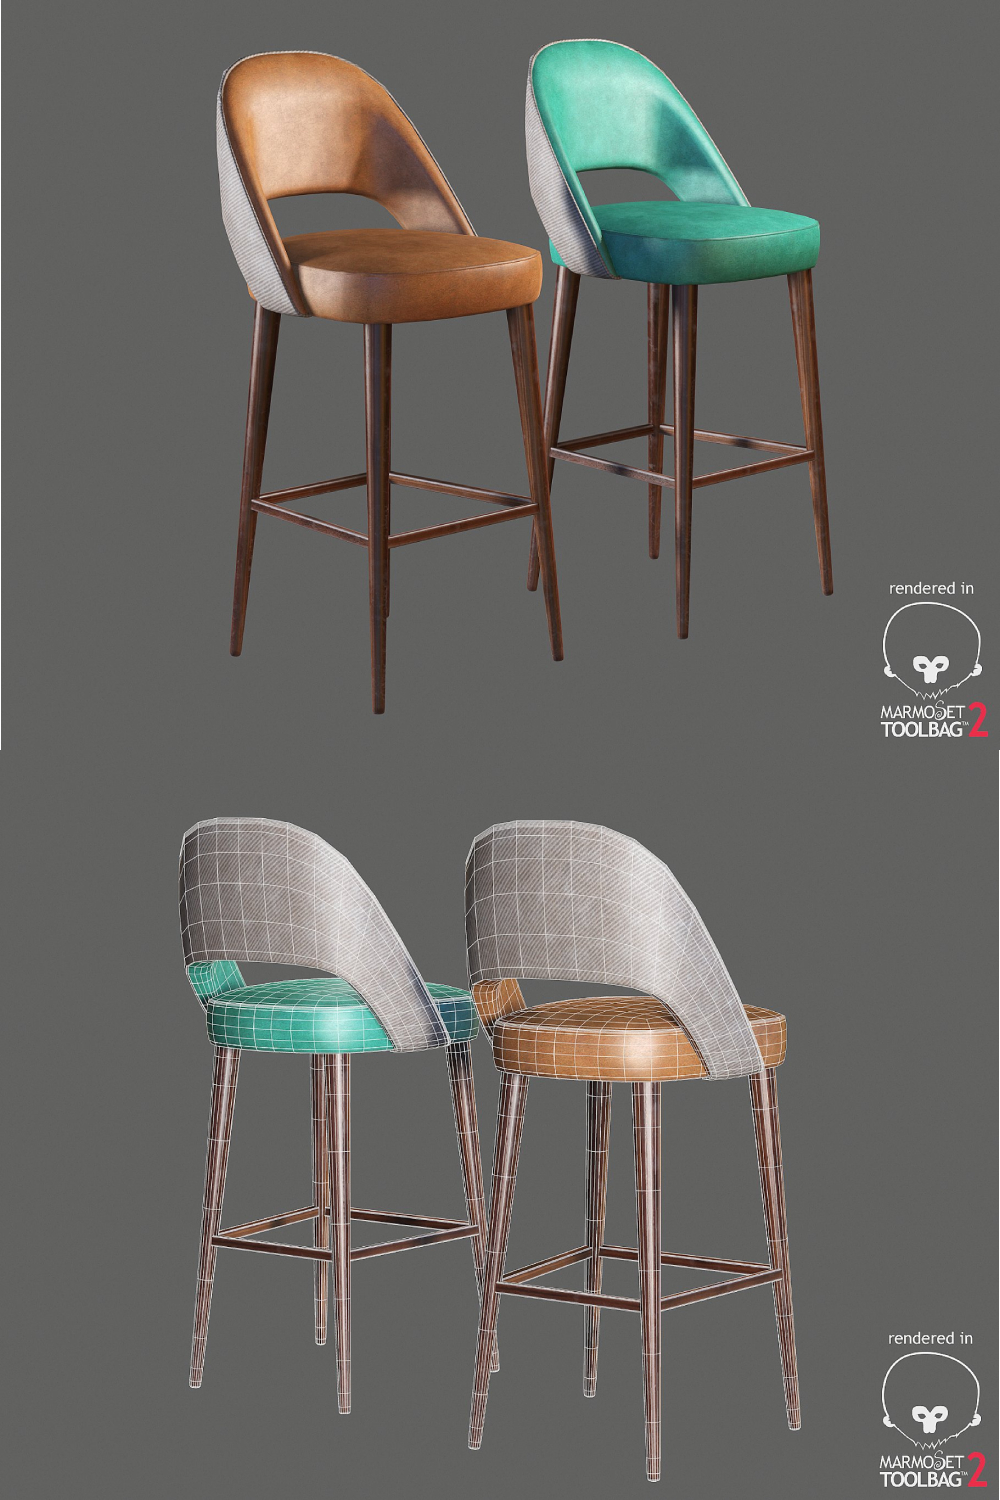 Mambo Ava Chair - Pinterest.